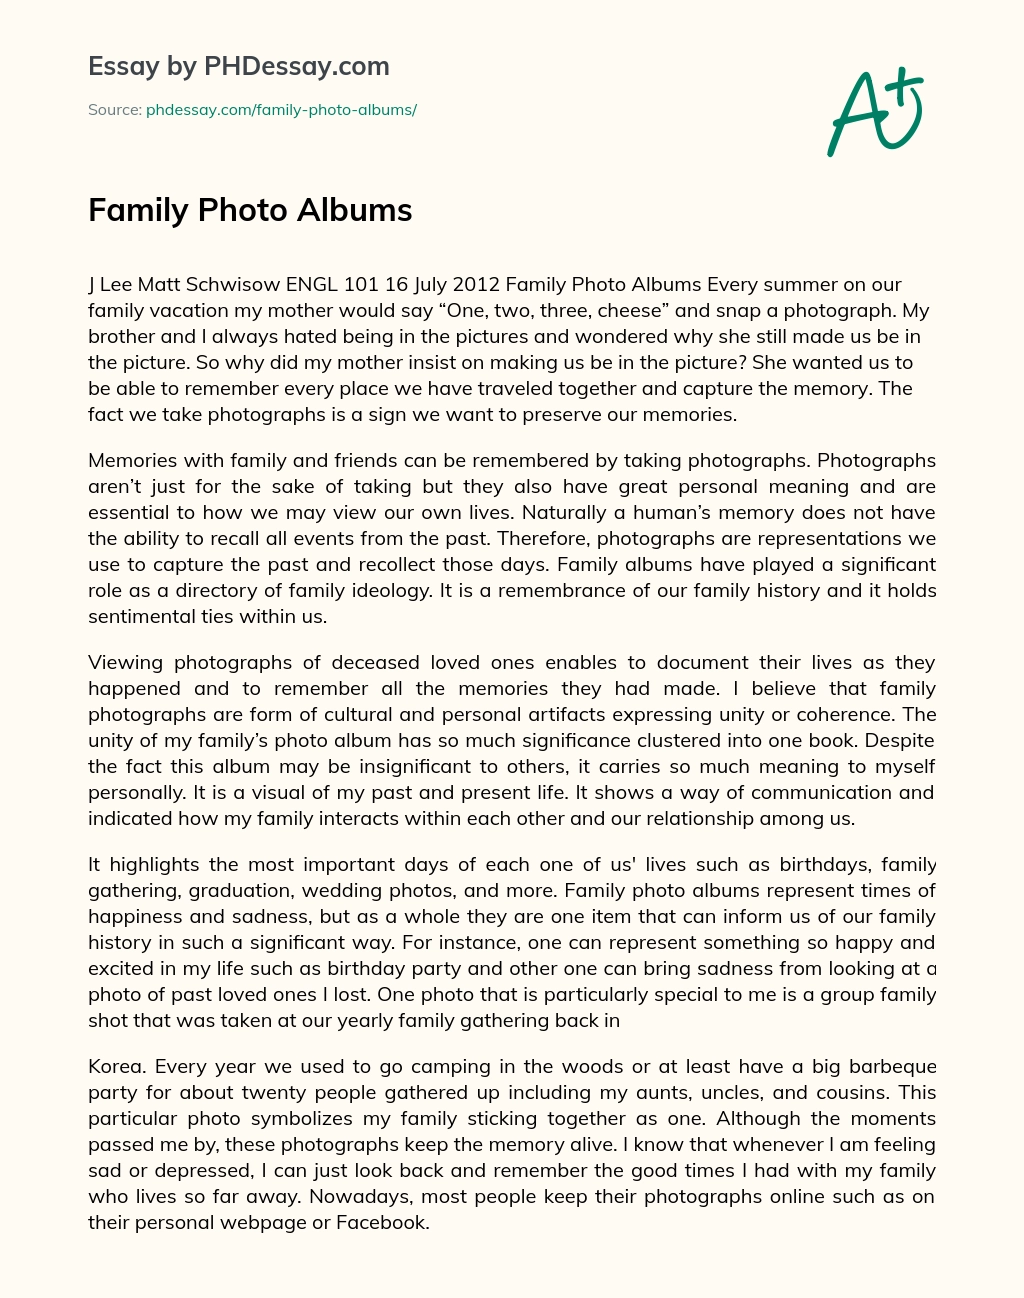 Family Photo Albums essay